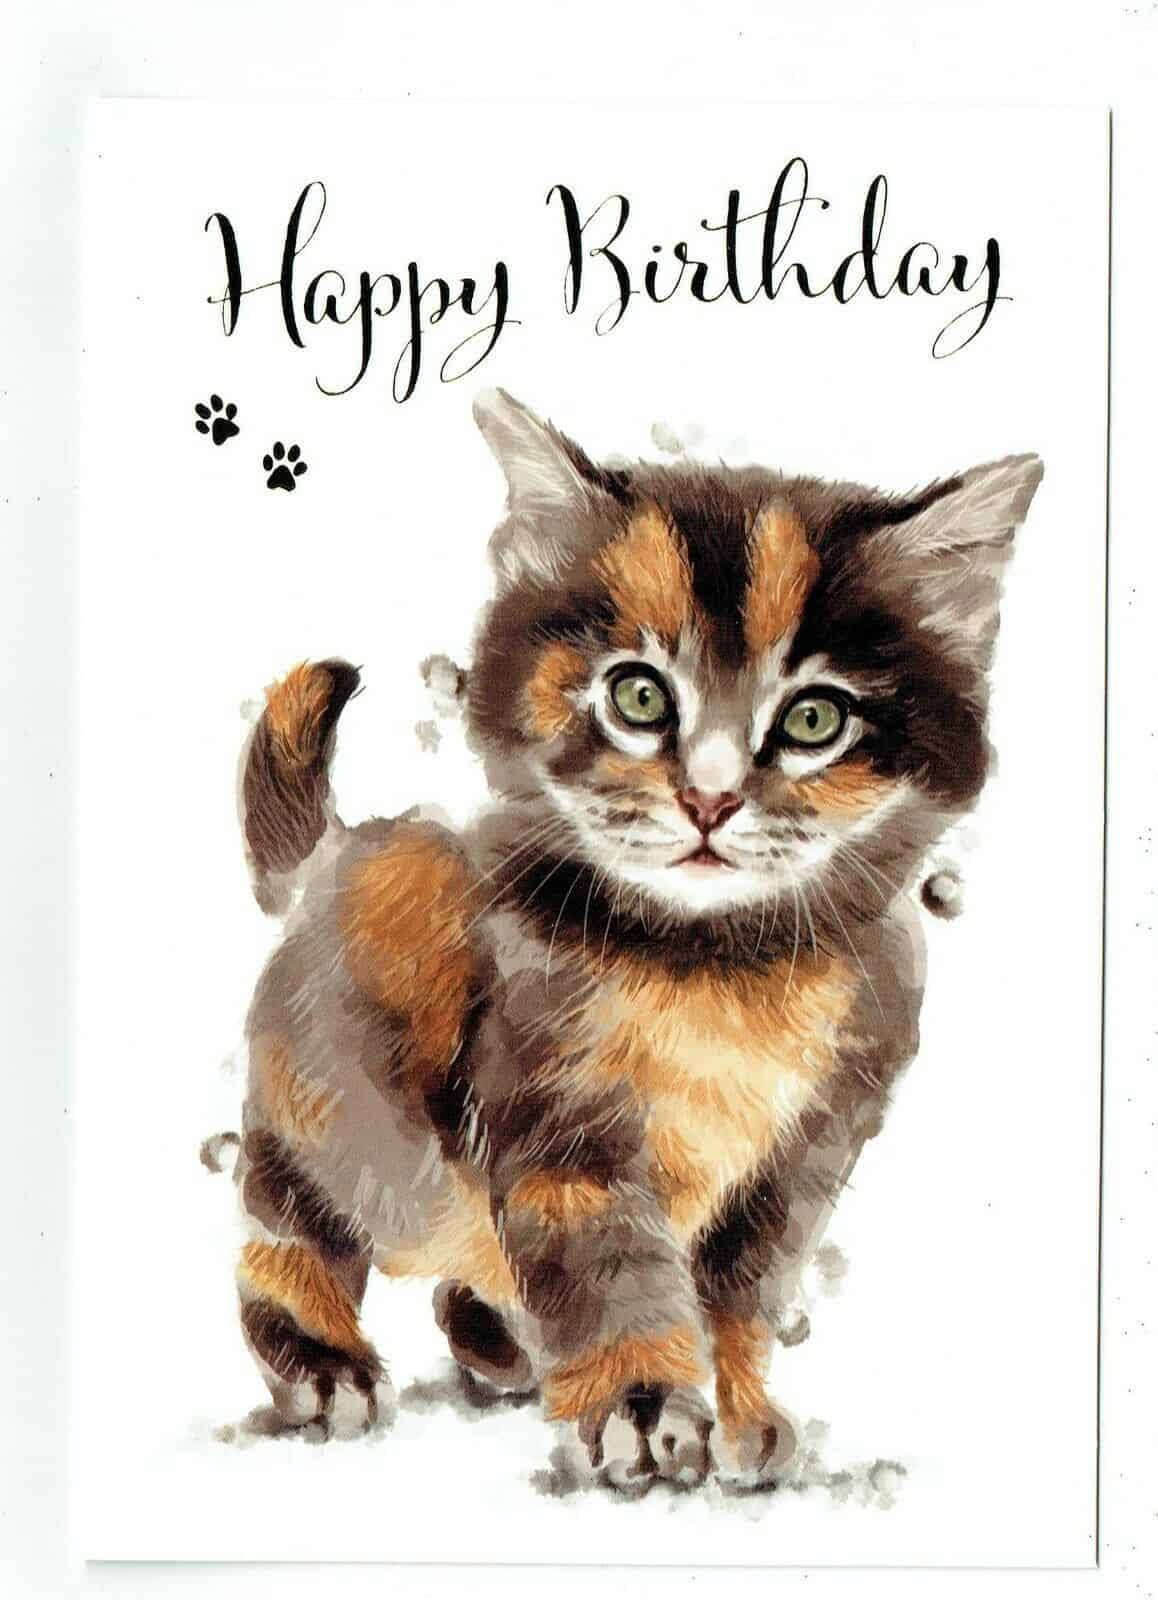 General Birthday Card With Cute Cat Design Happy Birthday eBay